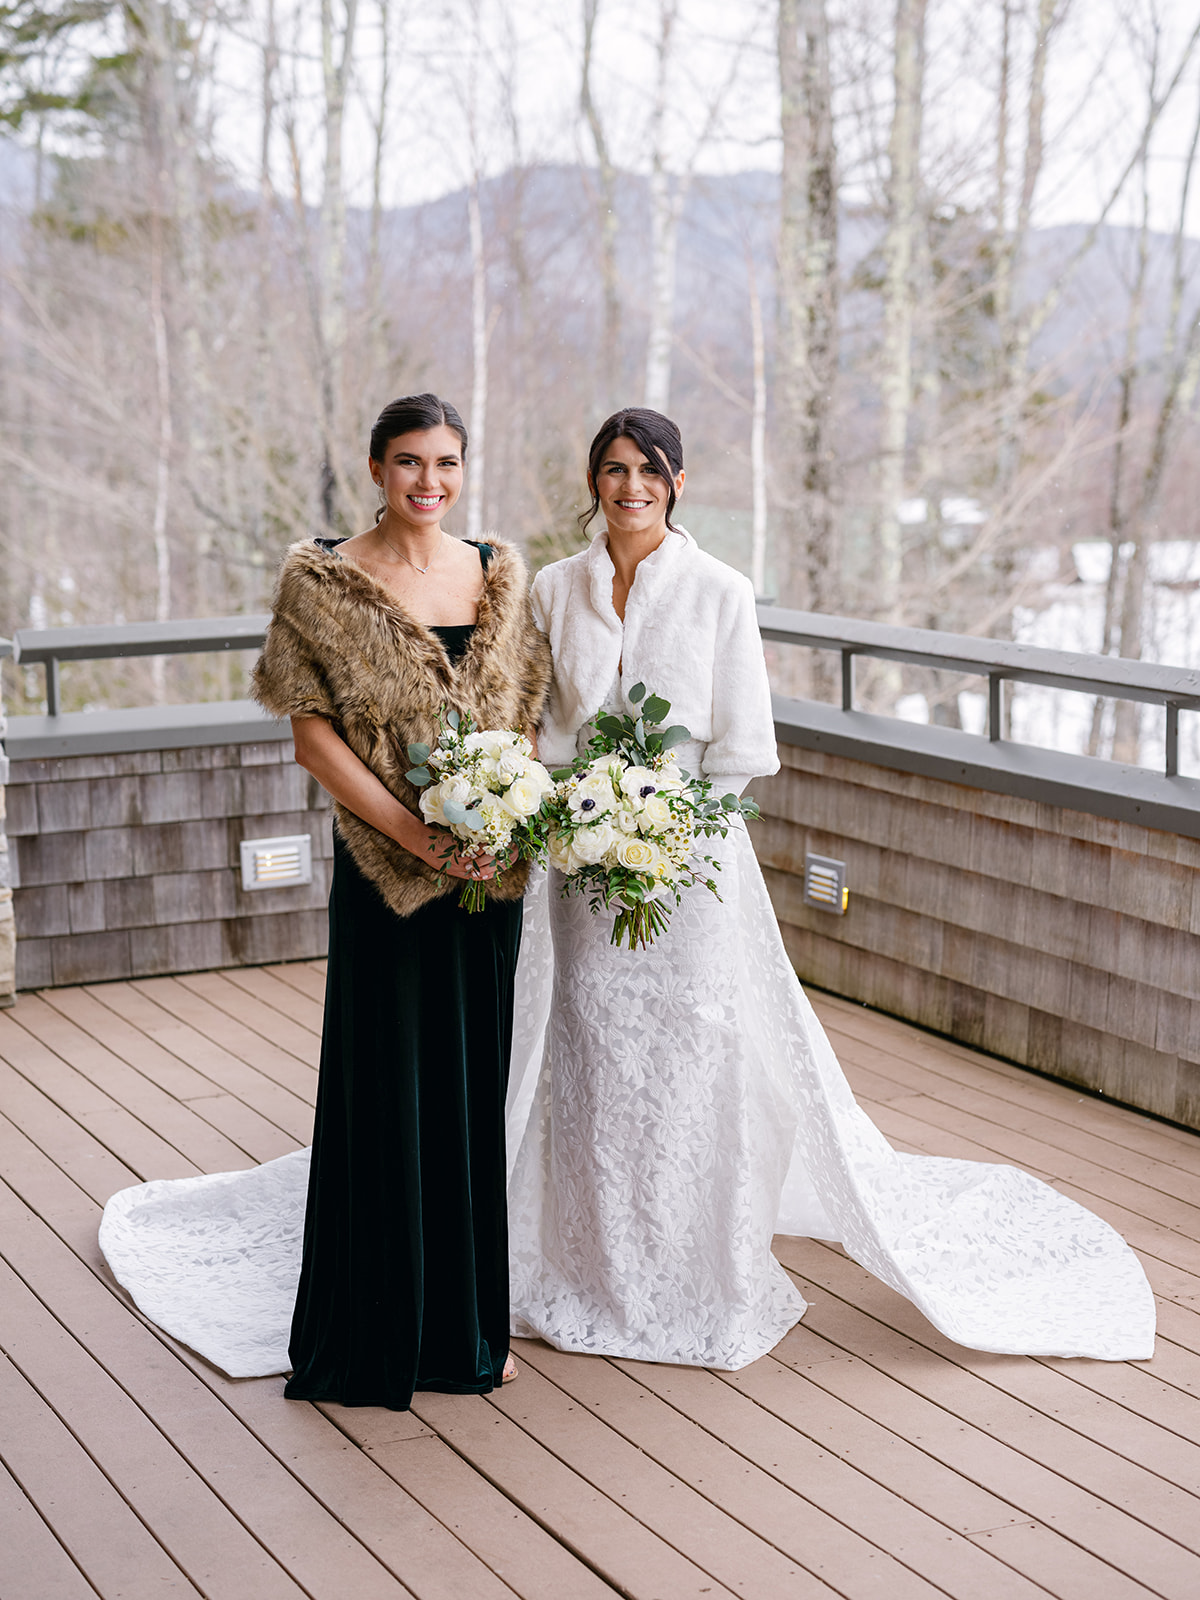 Stunning mountain wedding venue Vermont